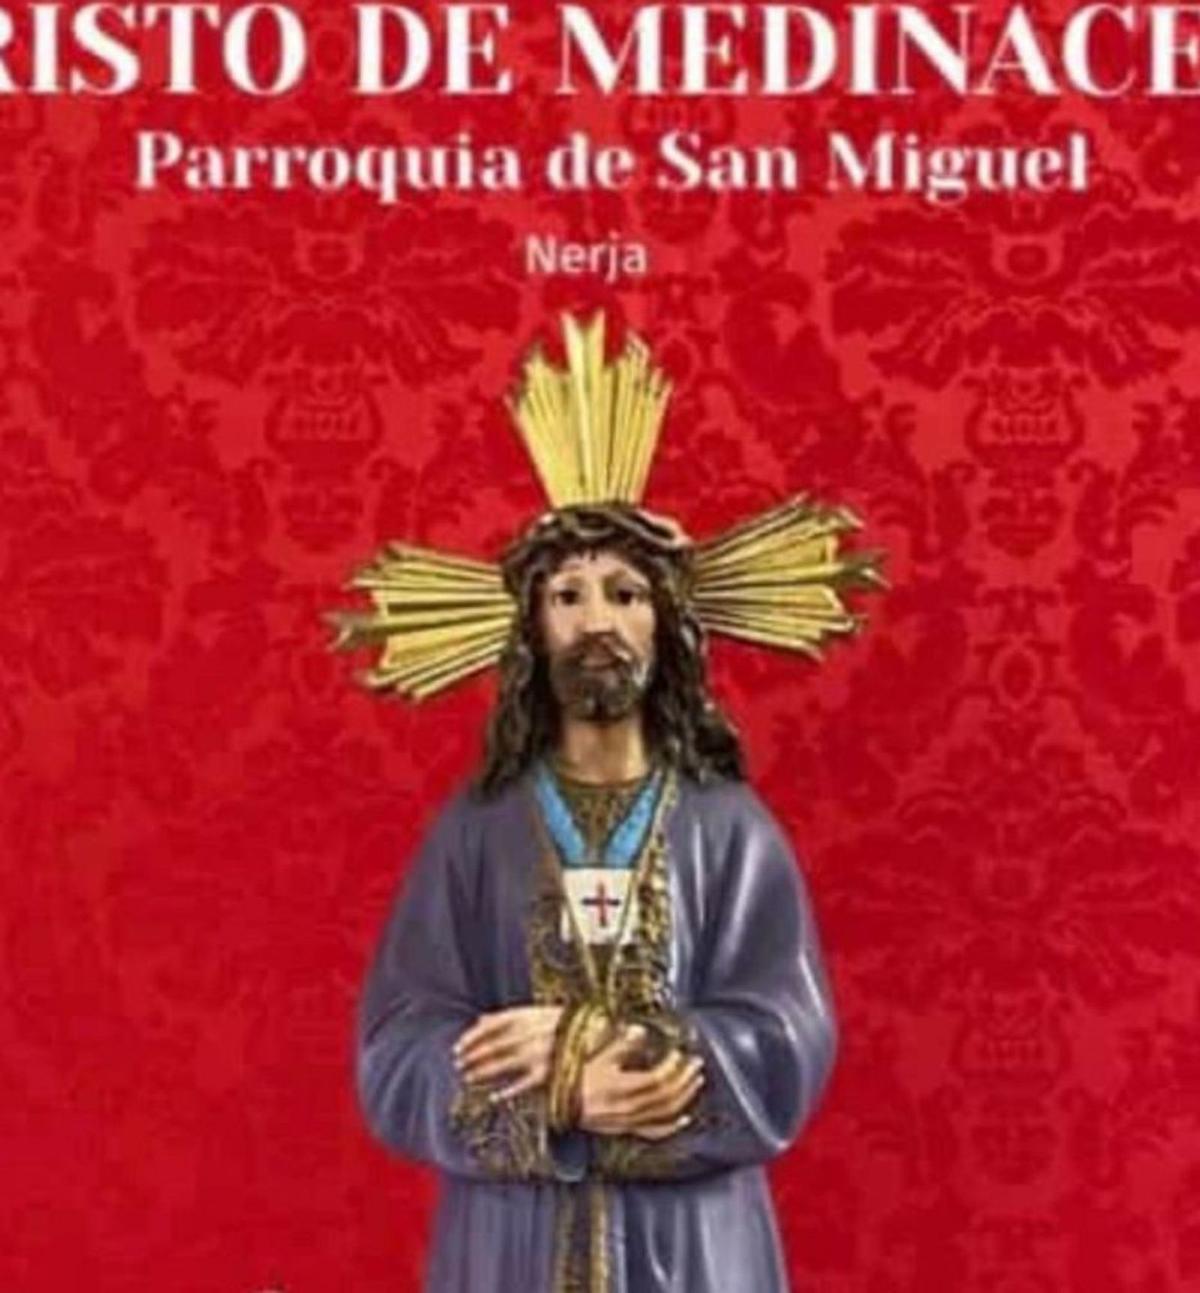 El nuevo Medinaceli de la parroquia de San Miguel. | L. O.